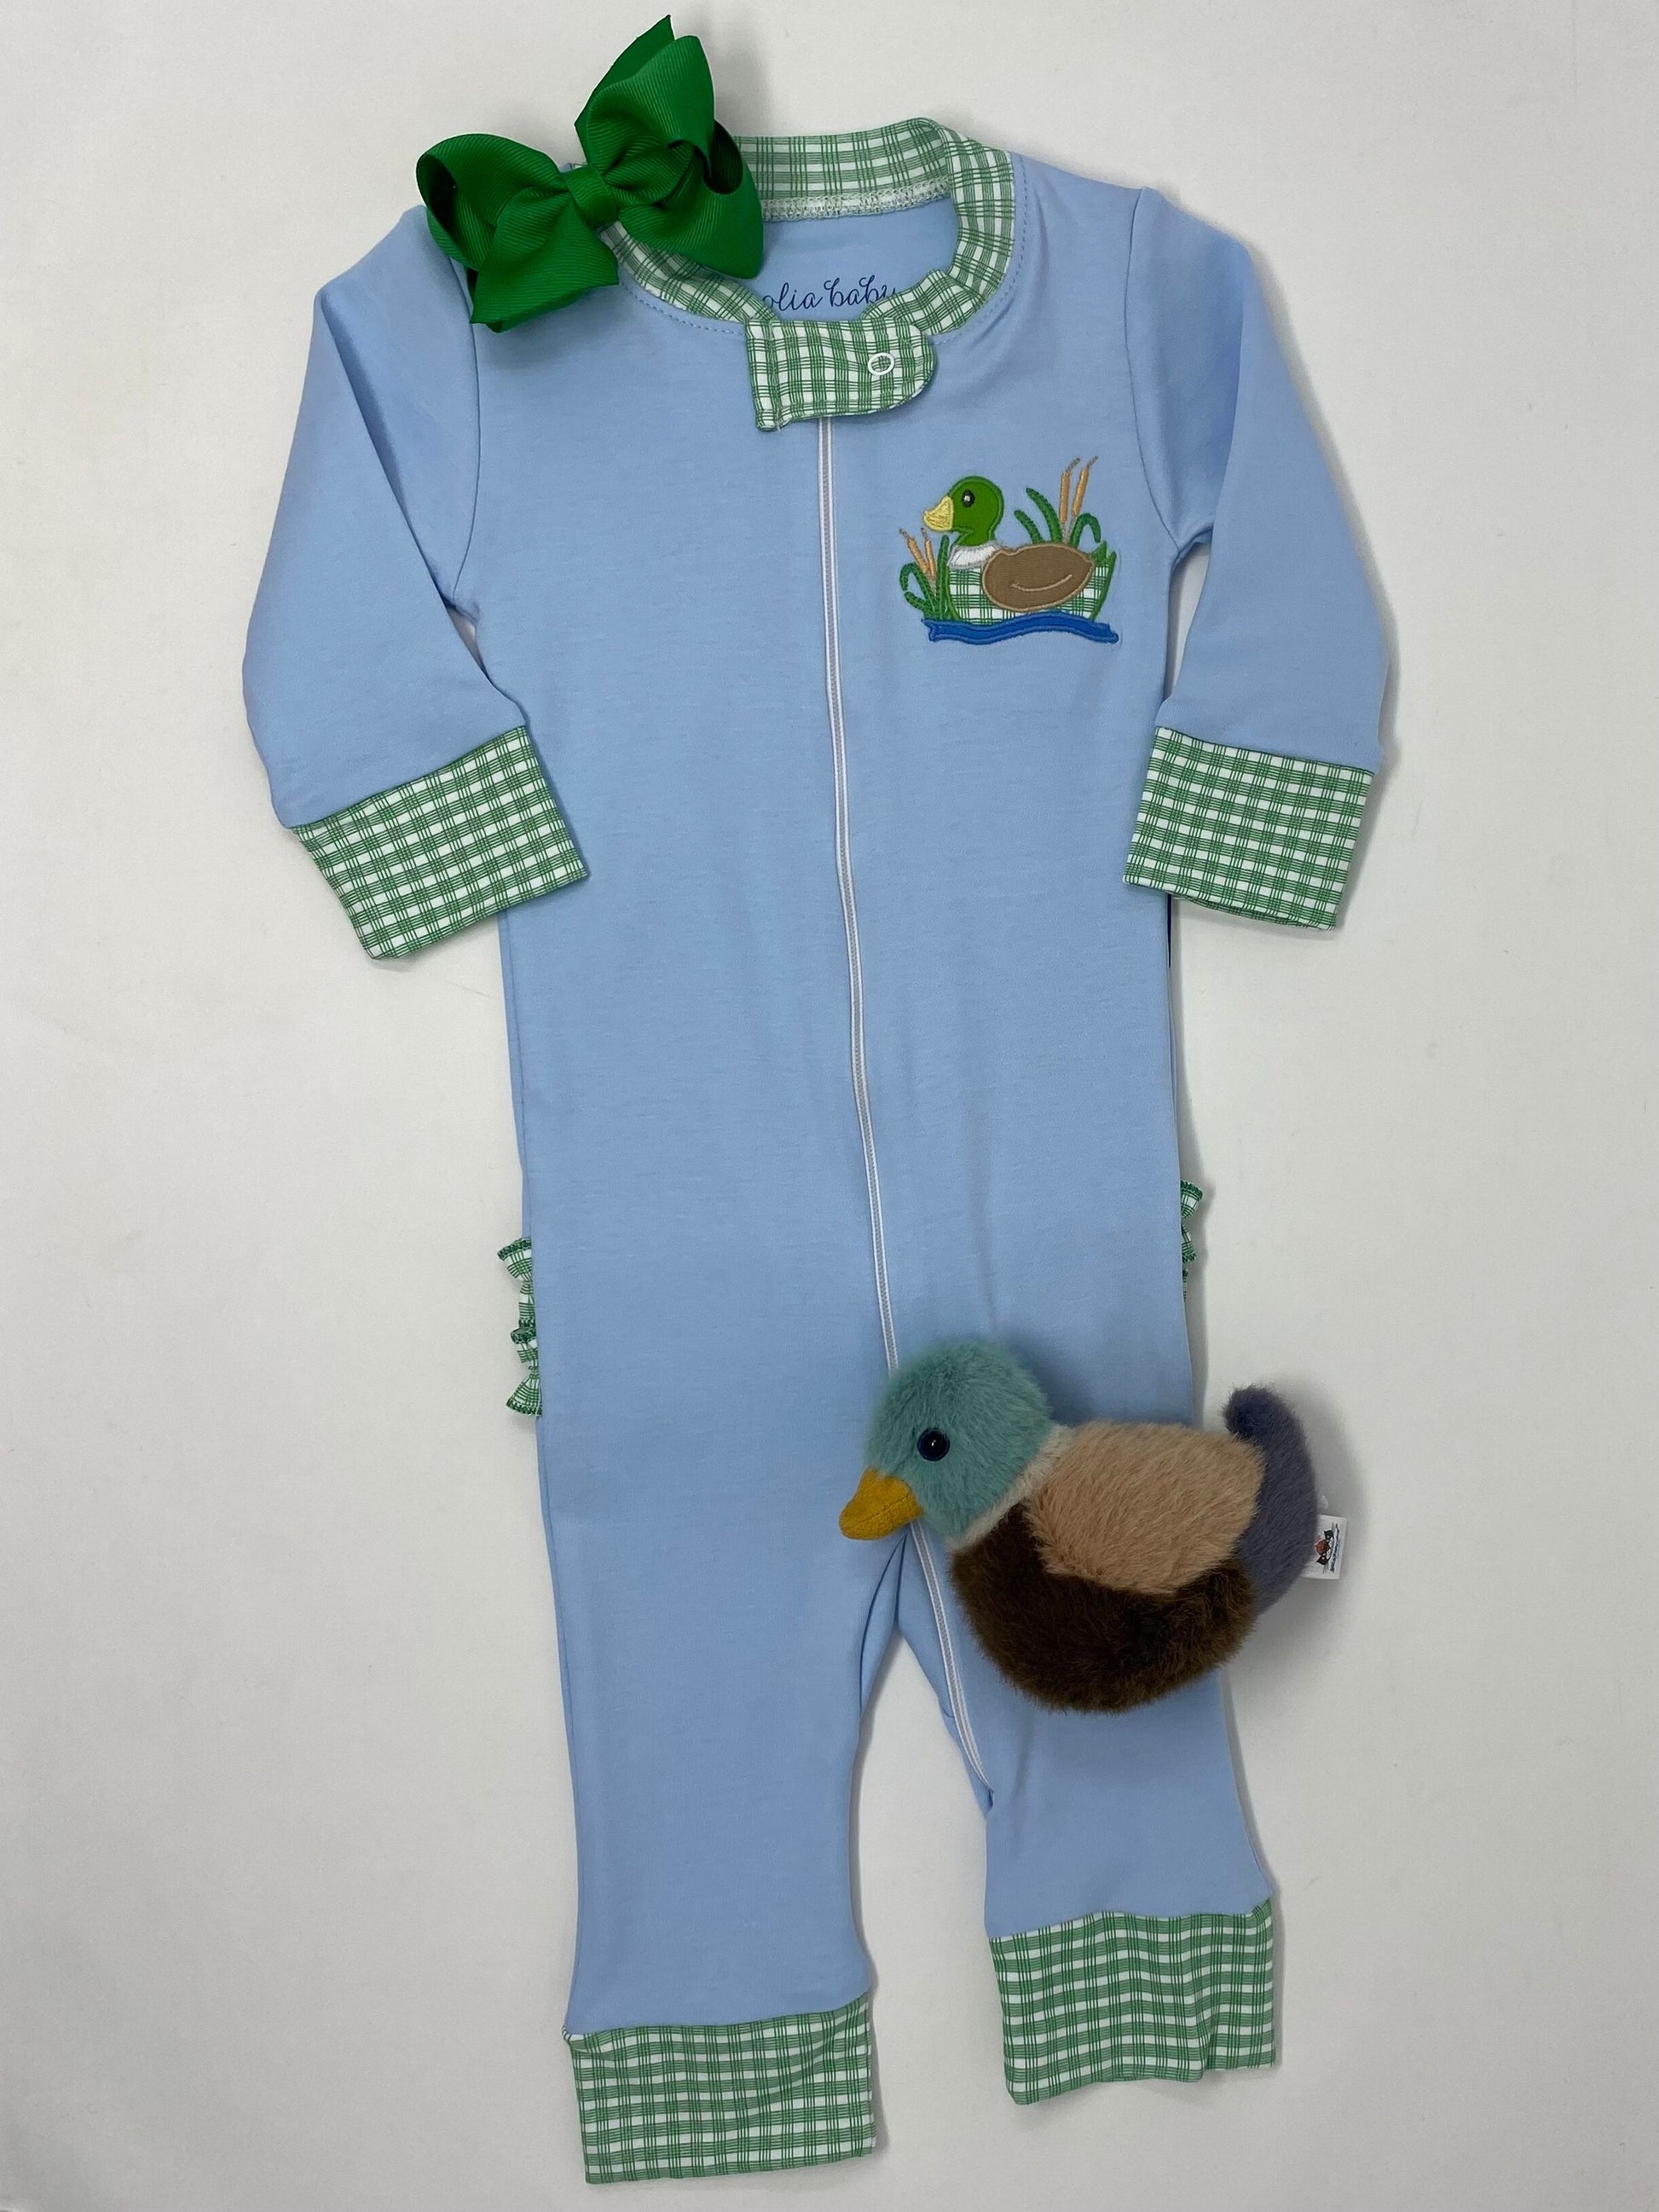 Gingham Green Mallard Applique Ruffle Zipper Pajamas Kids Pajamas Magnolia Baby   